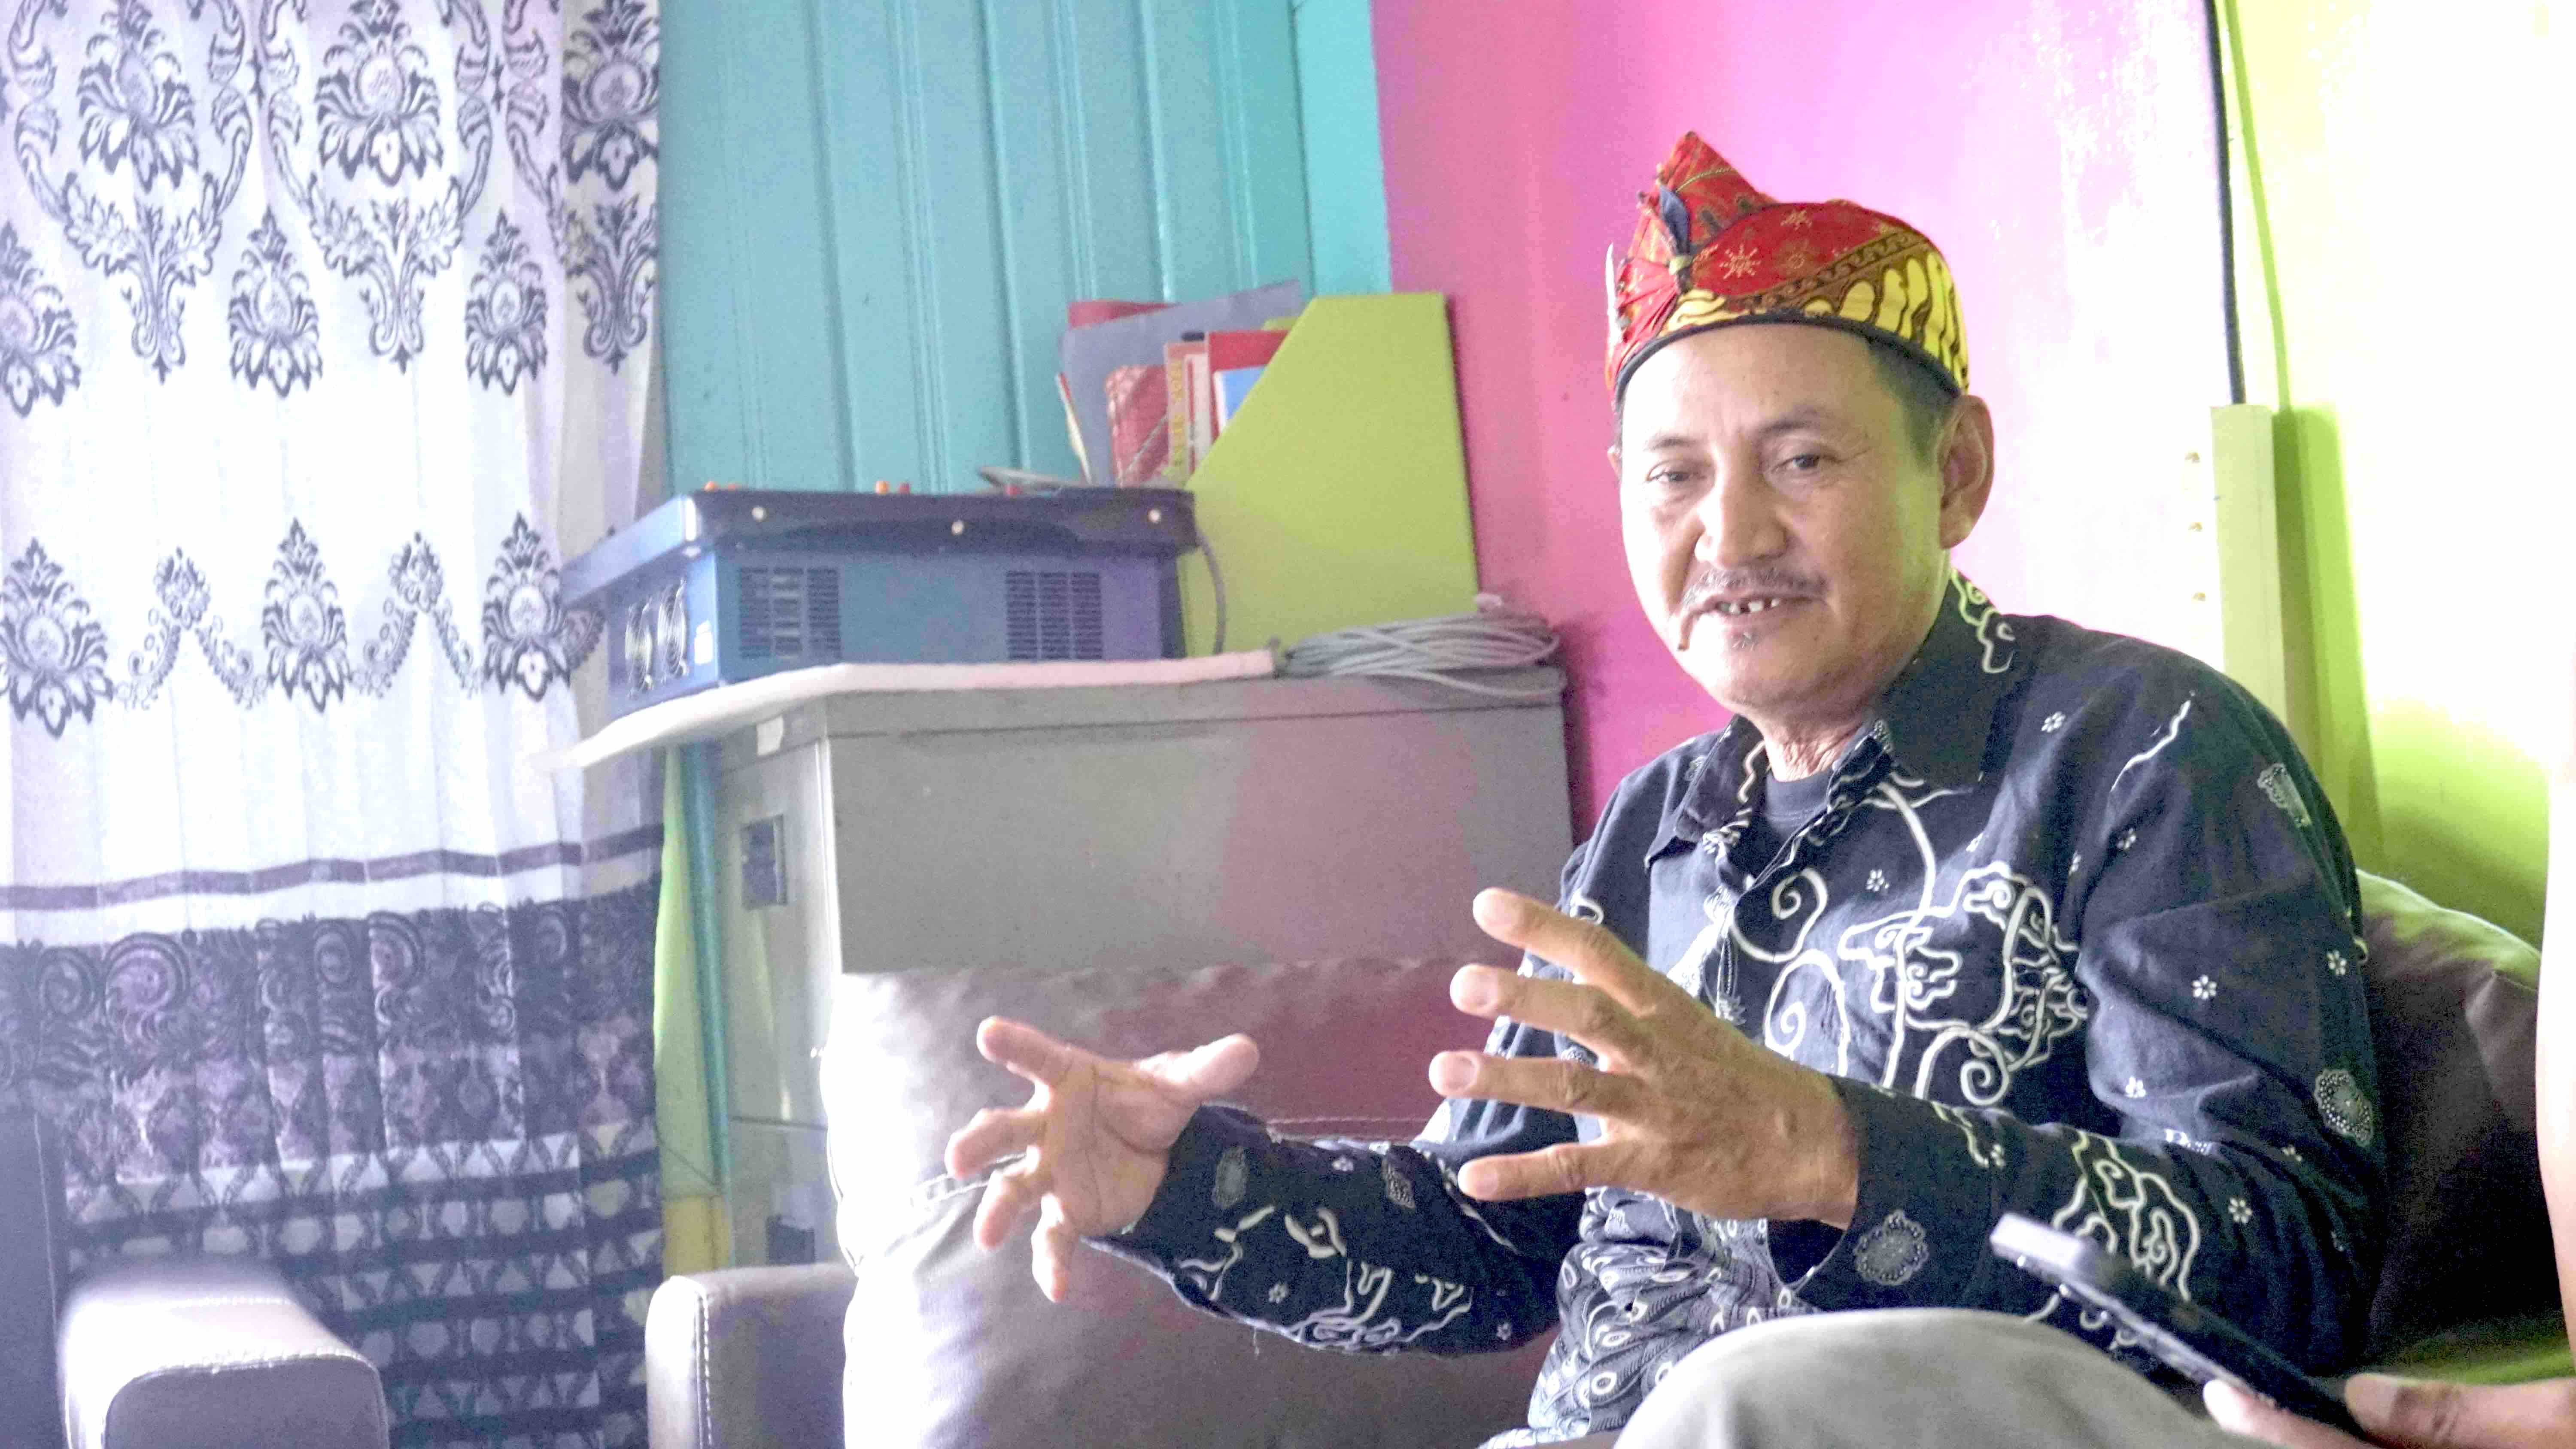 Madi bin Irot, kepala Desa Muara Enggelam, Kecamatan Muara Wis, Kutai Kartanegara. Banjir disebut berkah bagi nelayan di Danau Melintang. FOTO: MUHIBAR SOBARY ARDAN-KALTIMKECE.ID